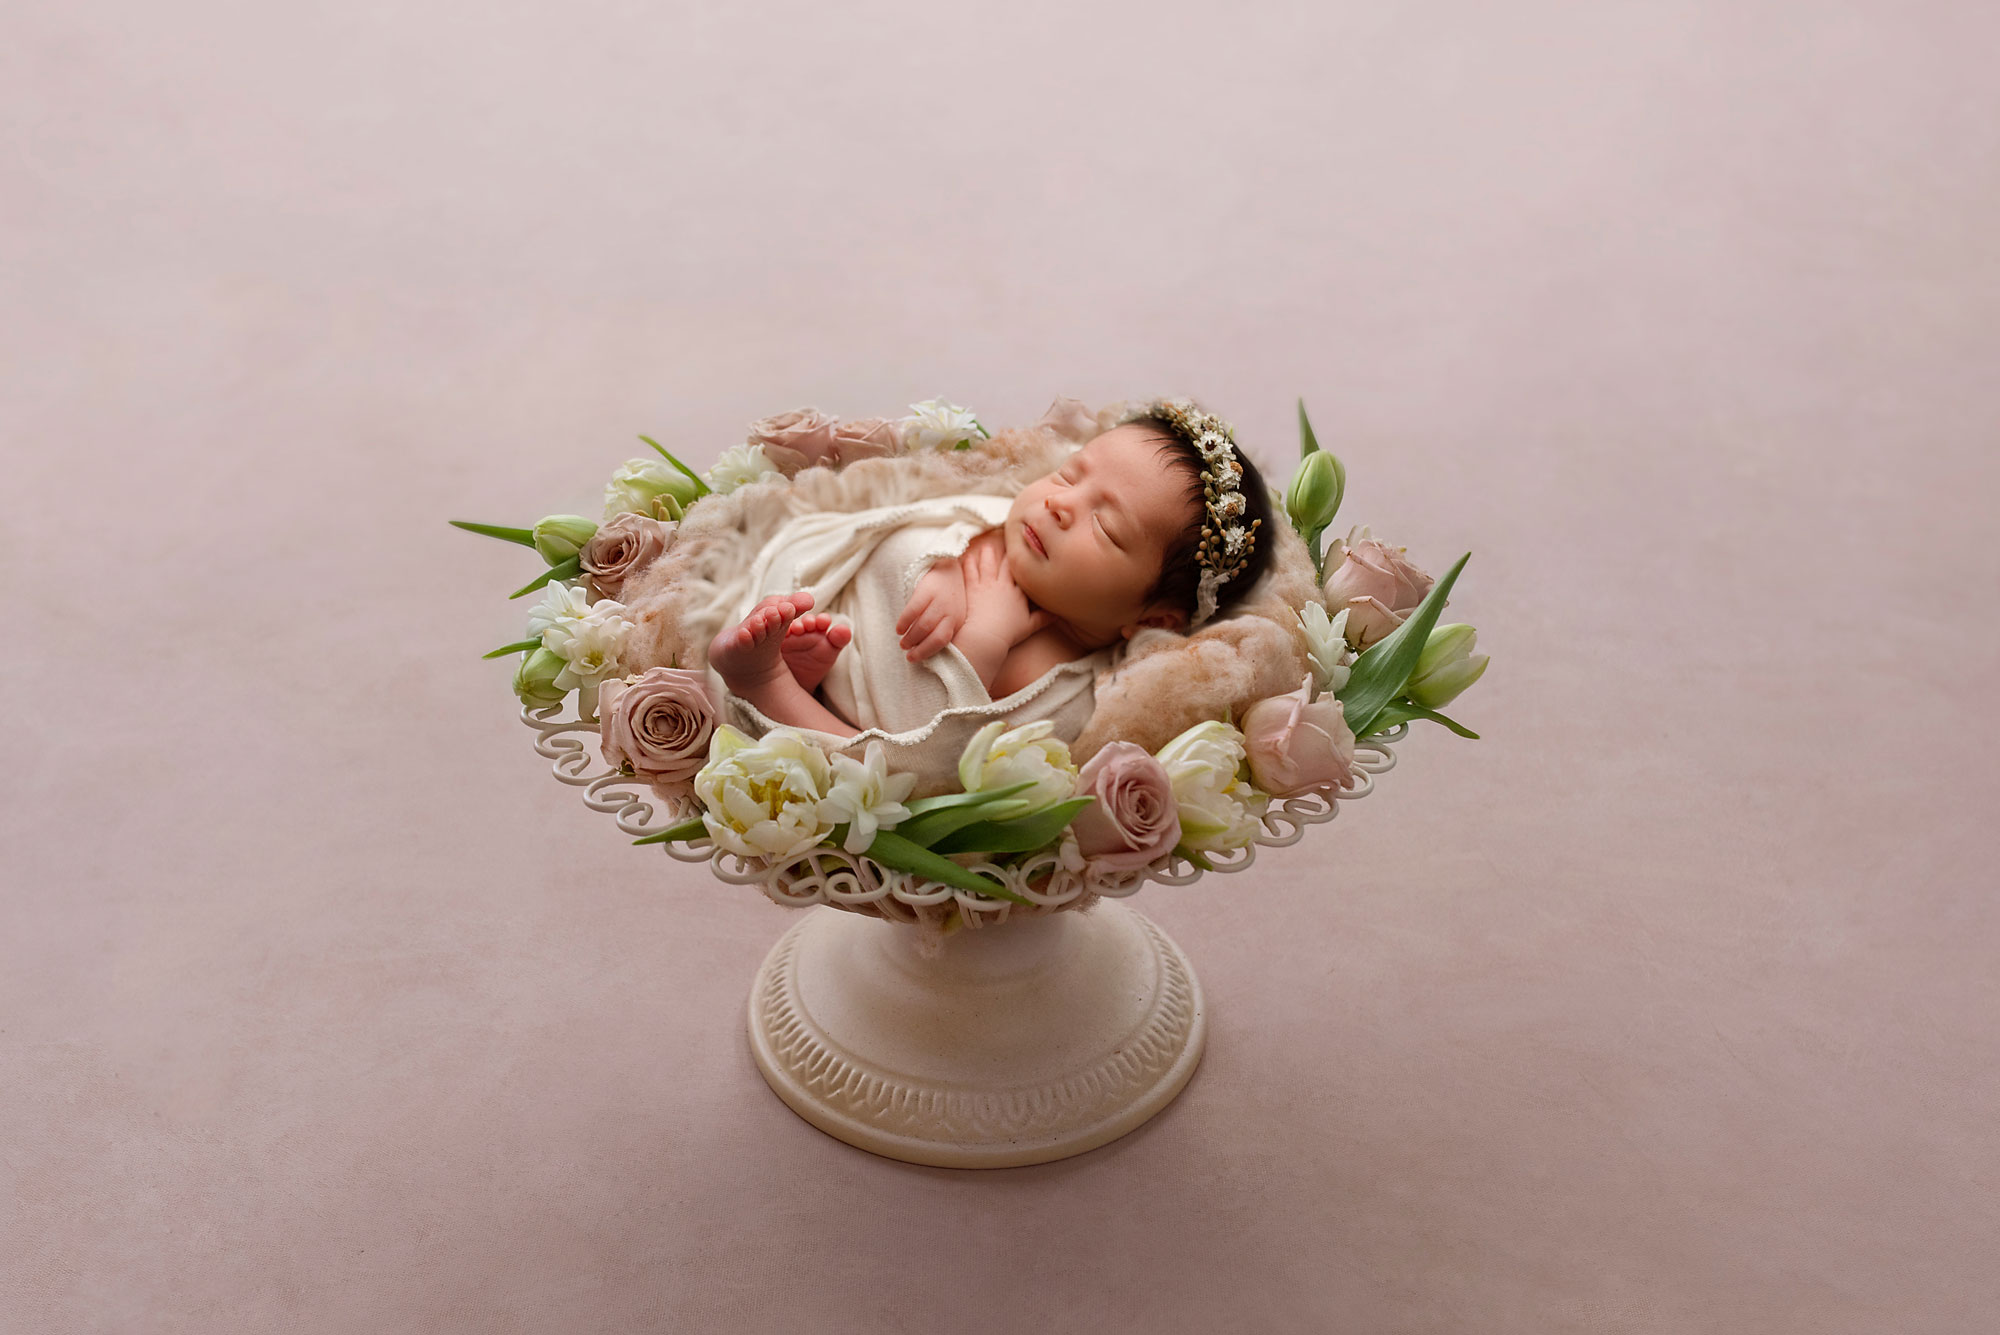 newborn baby girl in a wreath with flowers hunterdon county nj